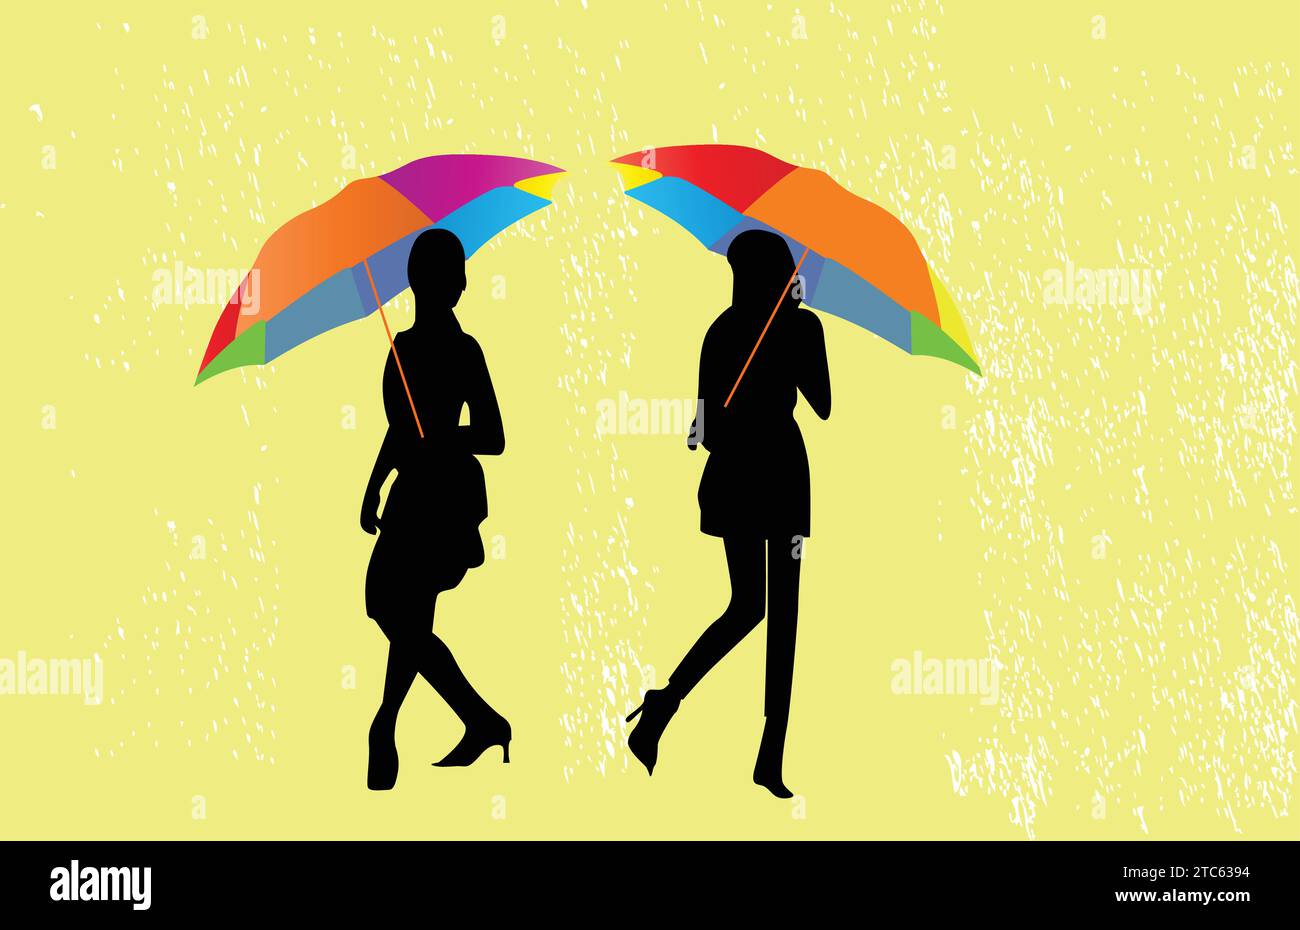 Free Vector Girls with Umbrella Walking in the Rain Illustration Design Stock Vector